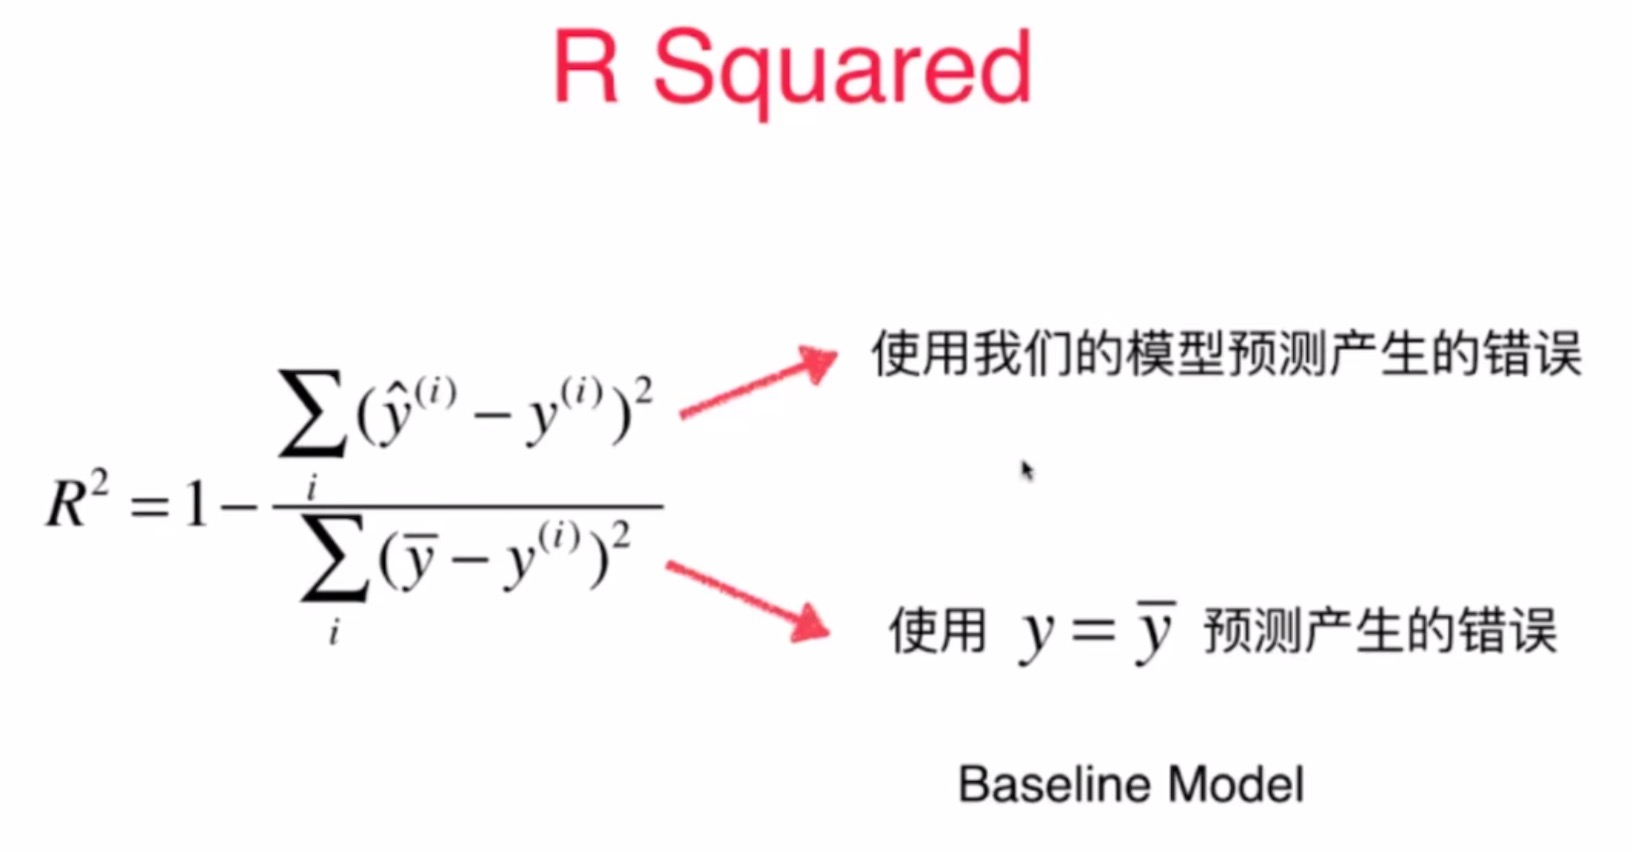 p11-R Squared衡量指标